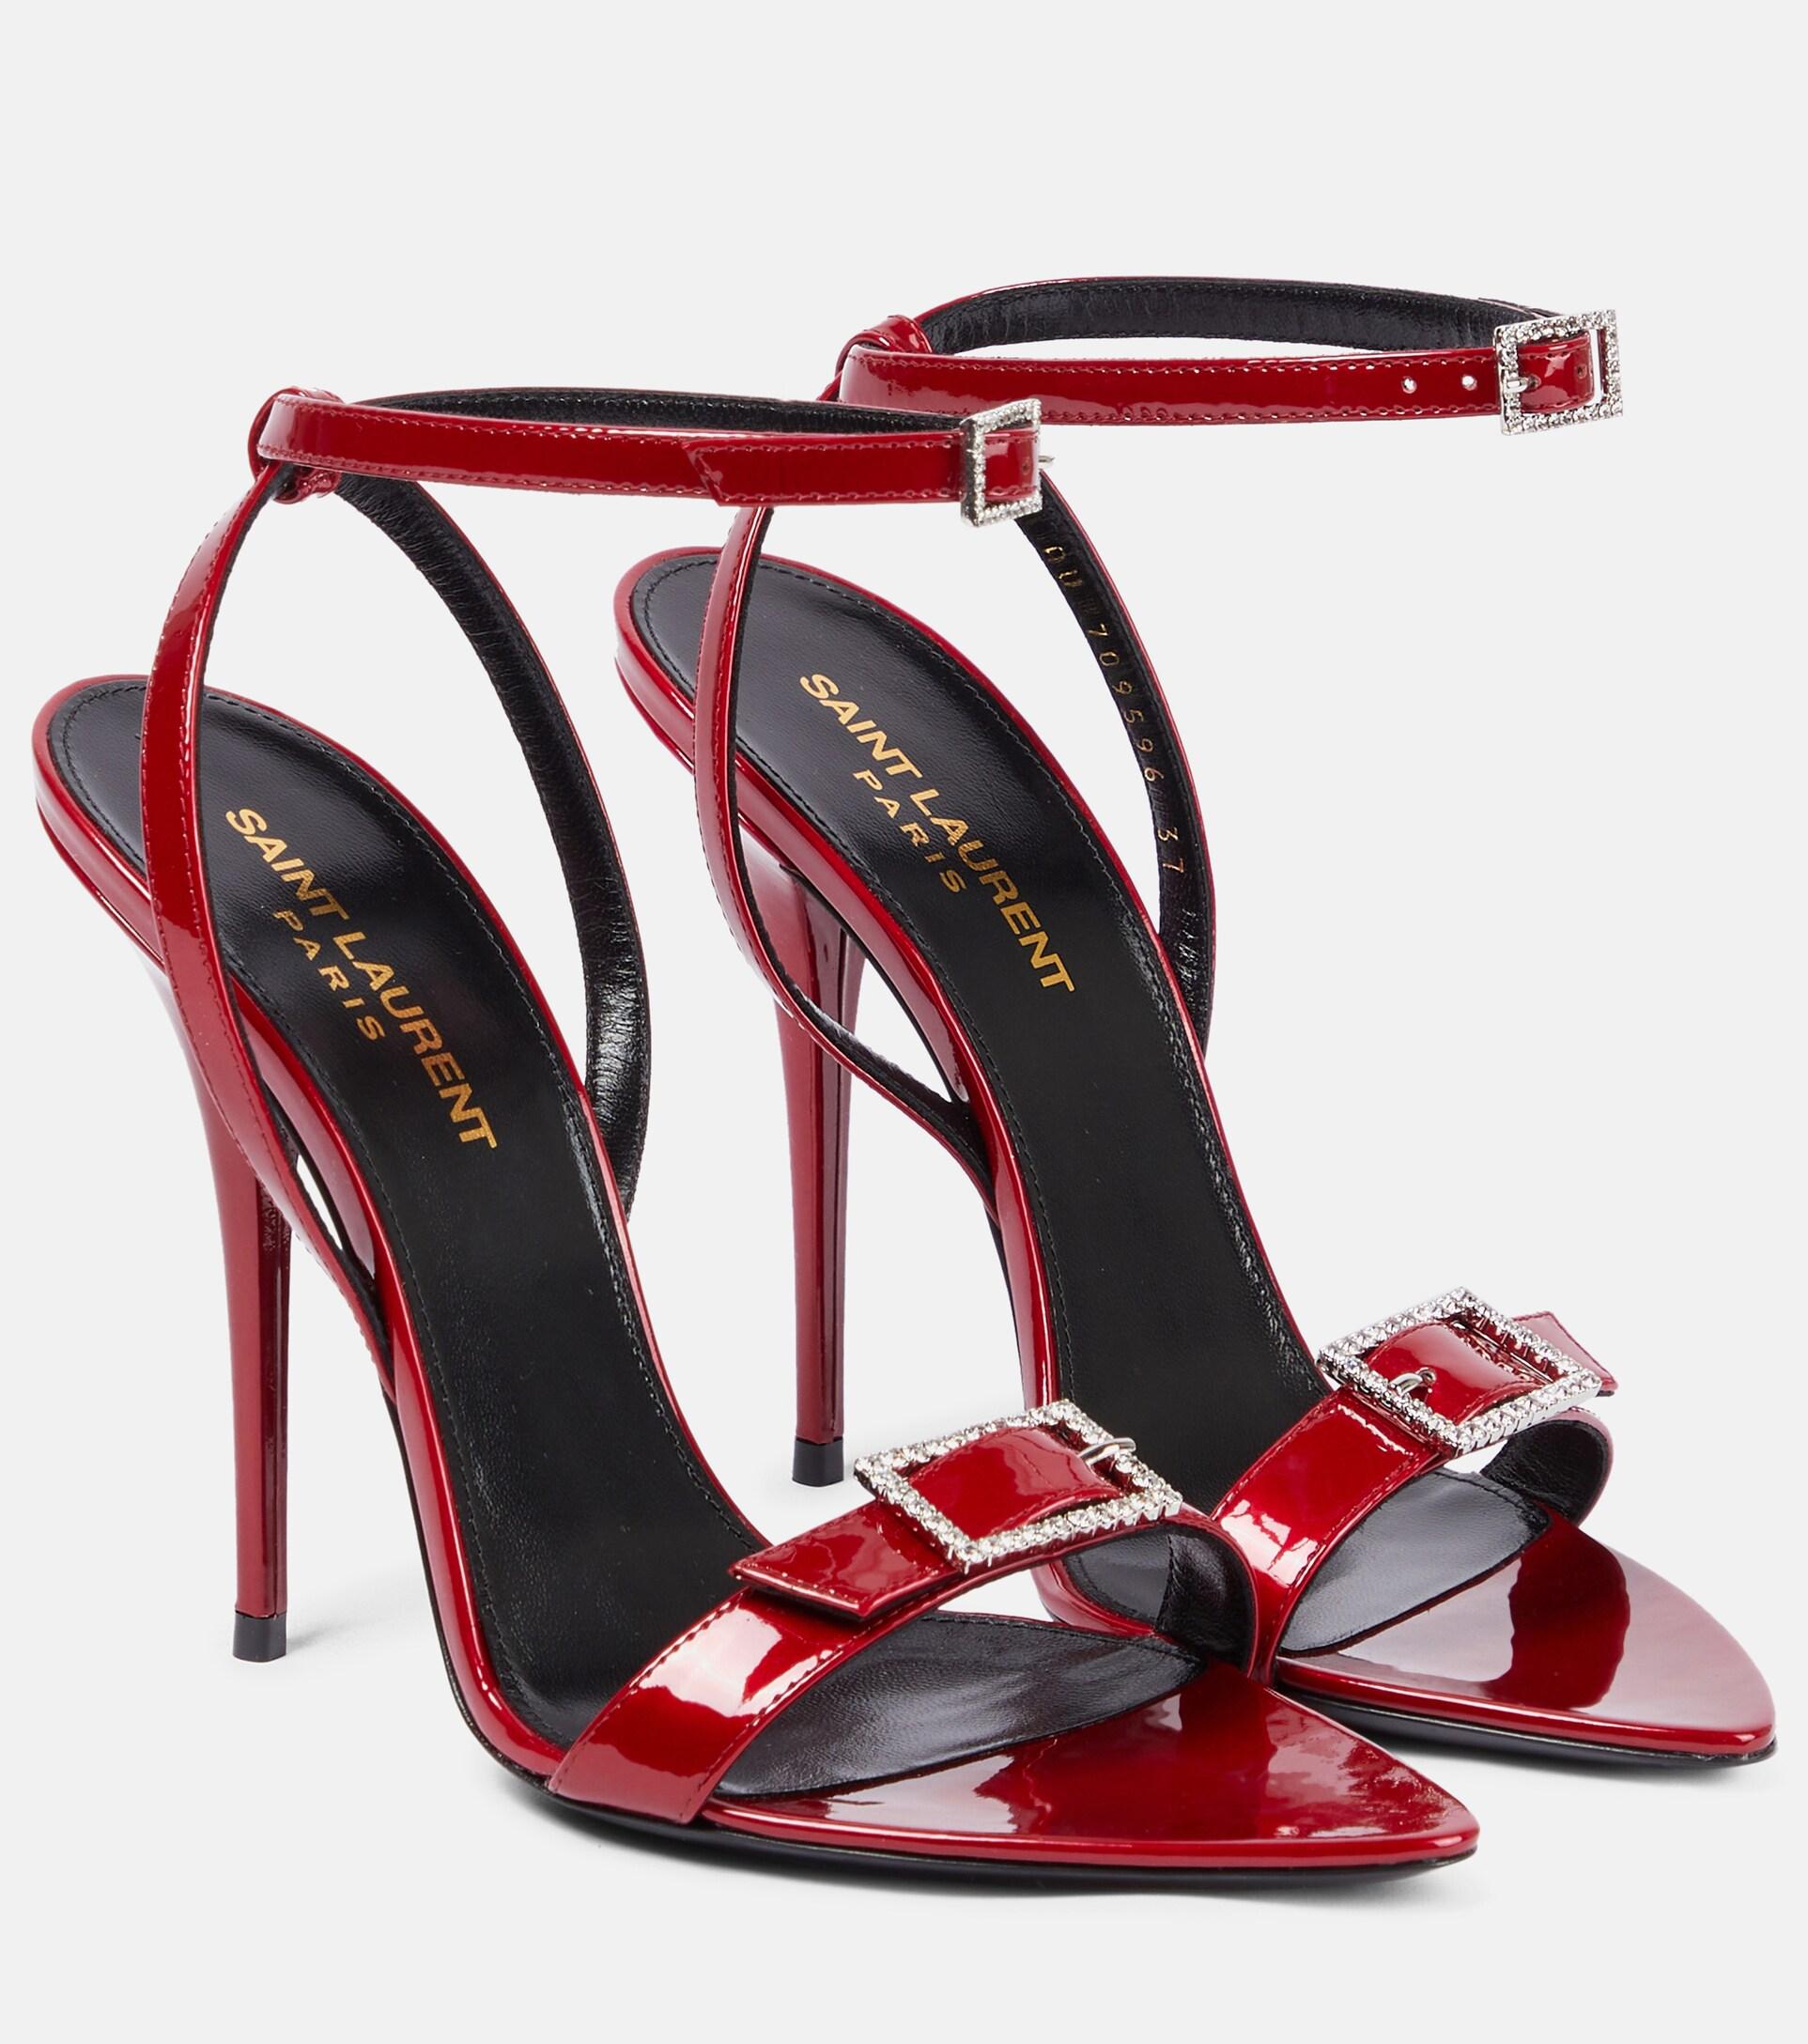 Saint Laurent Claude 110 Patent Leather Sandals in Red | Lyst